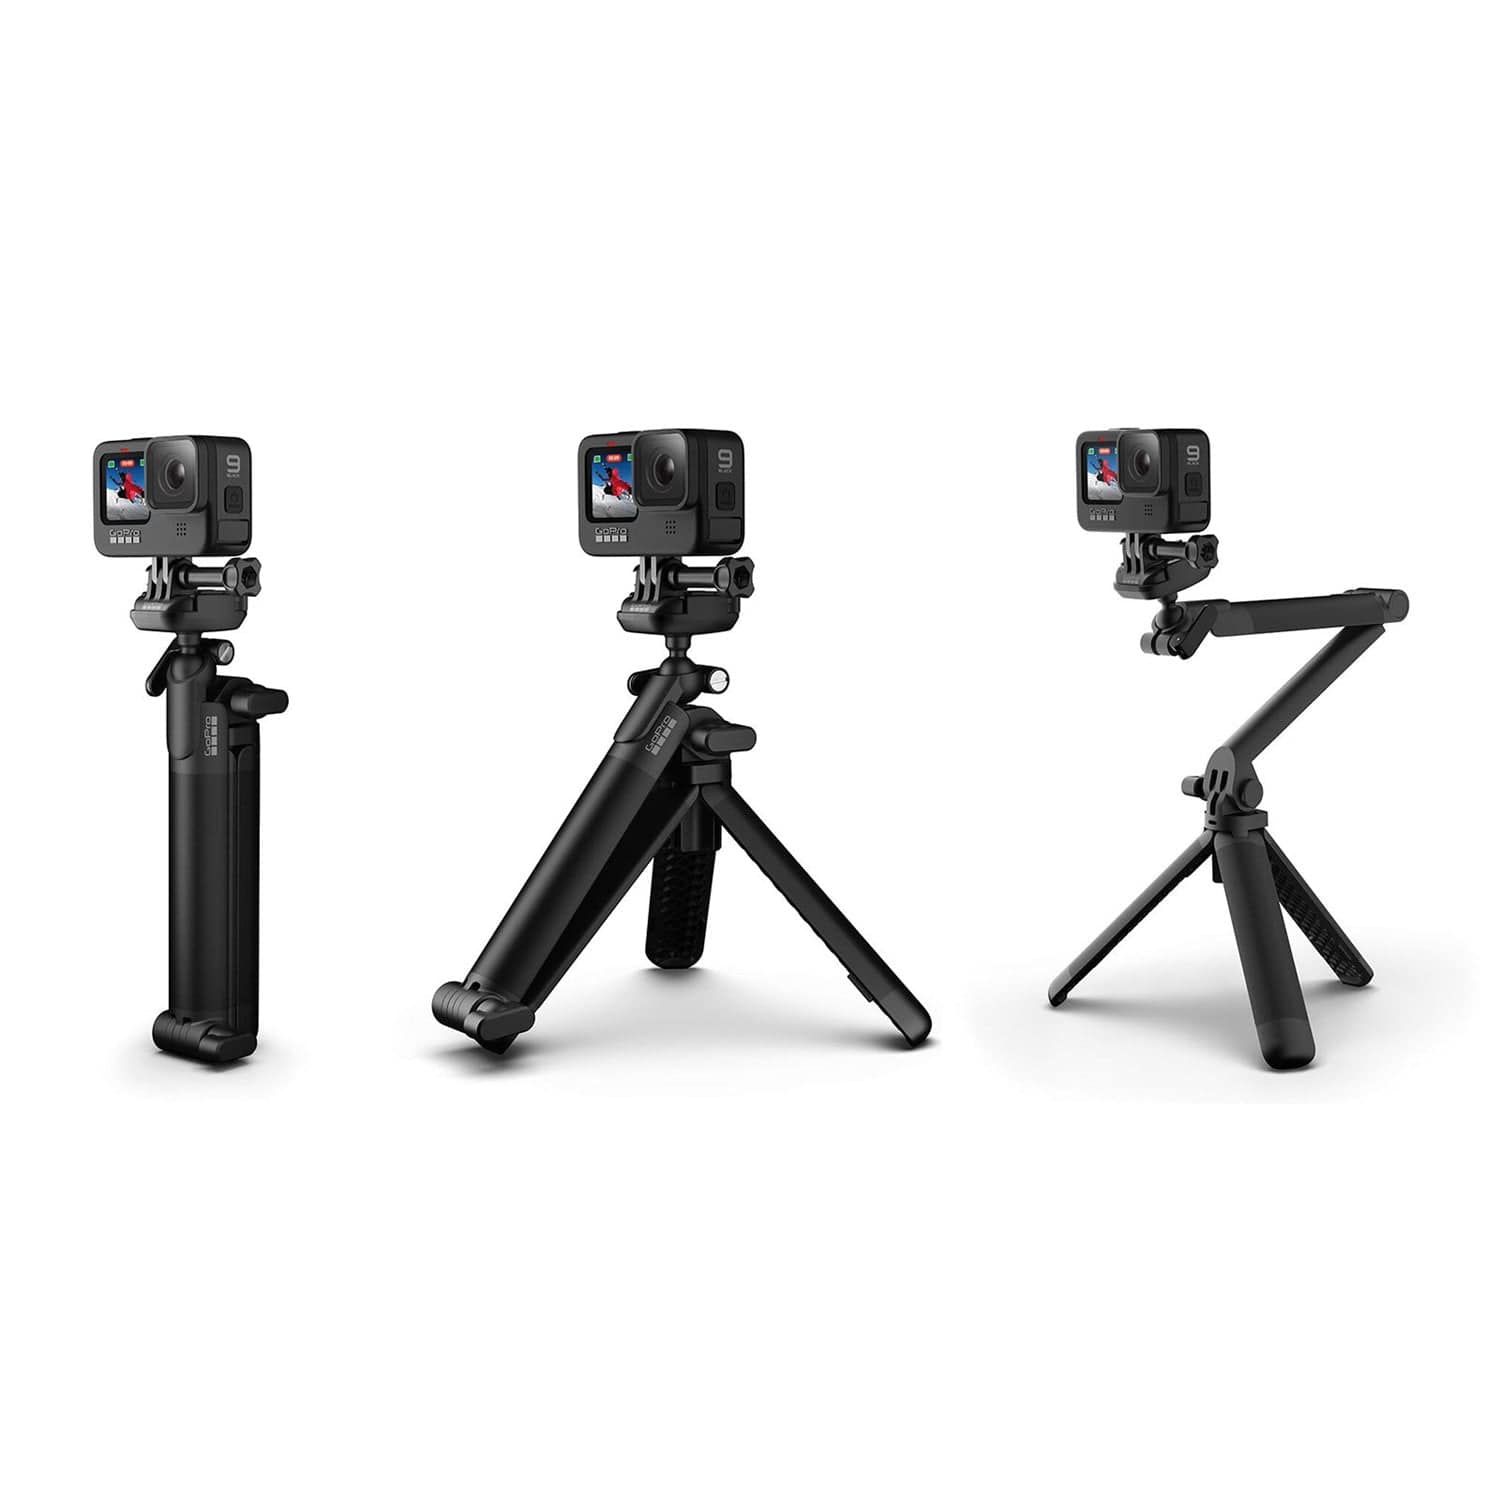 GoPro: Introducing 3-Way Grip, Arm